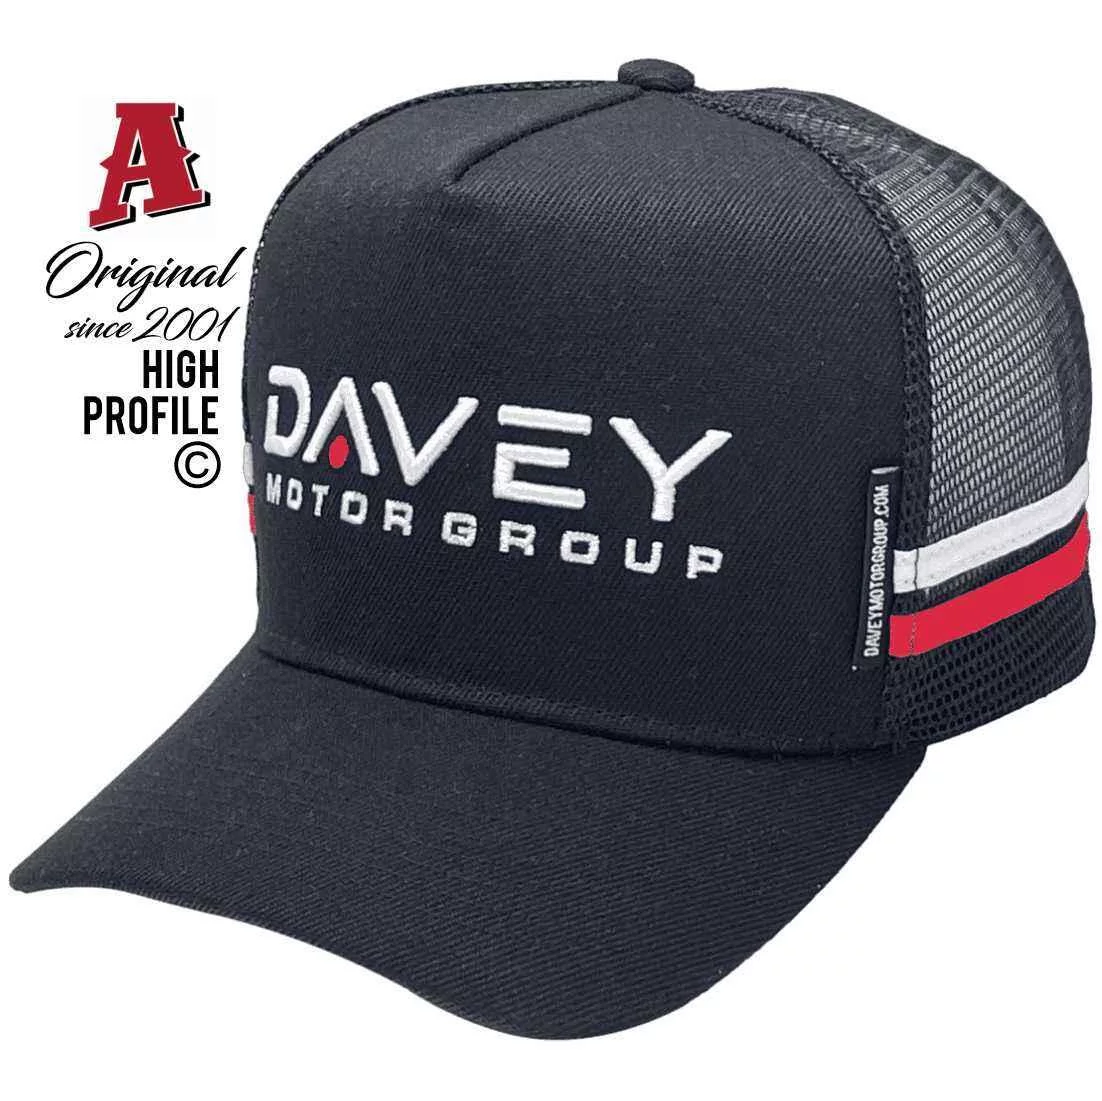 Davey Motor Group Breakwater VIC Basic Aussie Trucker Hats with Australian HeadFit Crown & Double SideBands Black Snapback